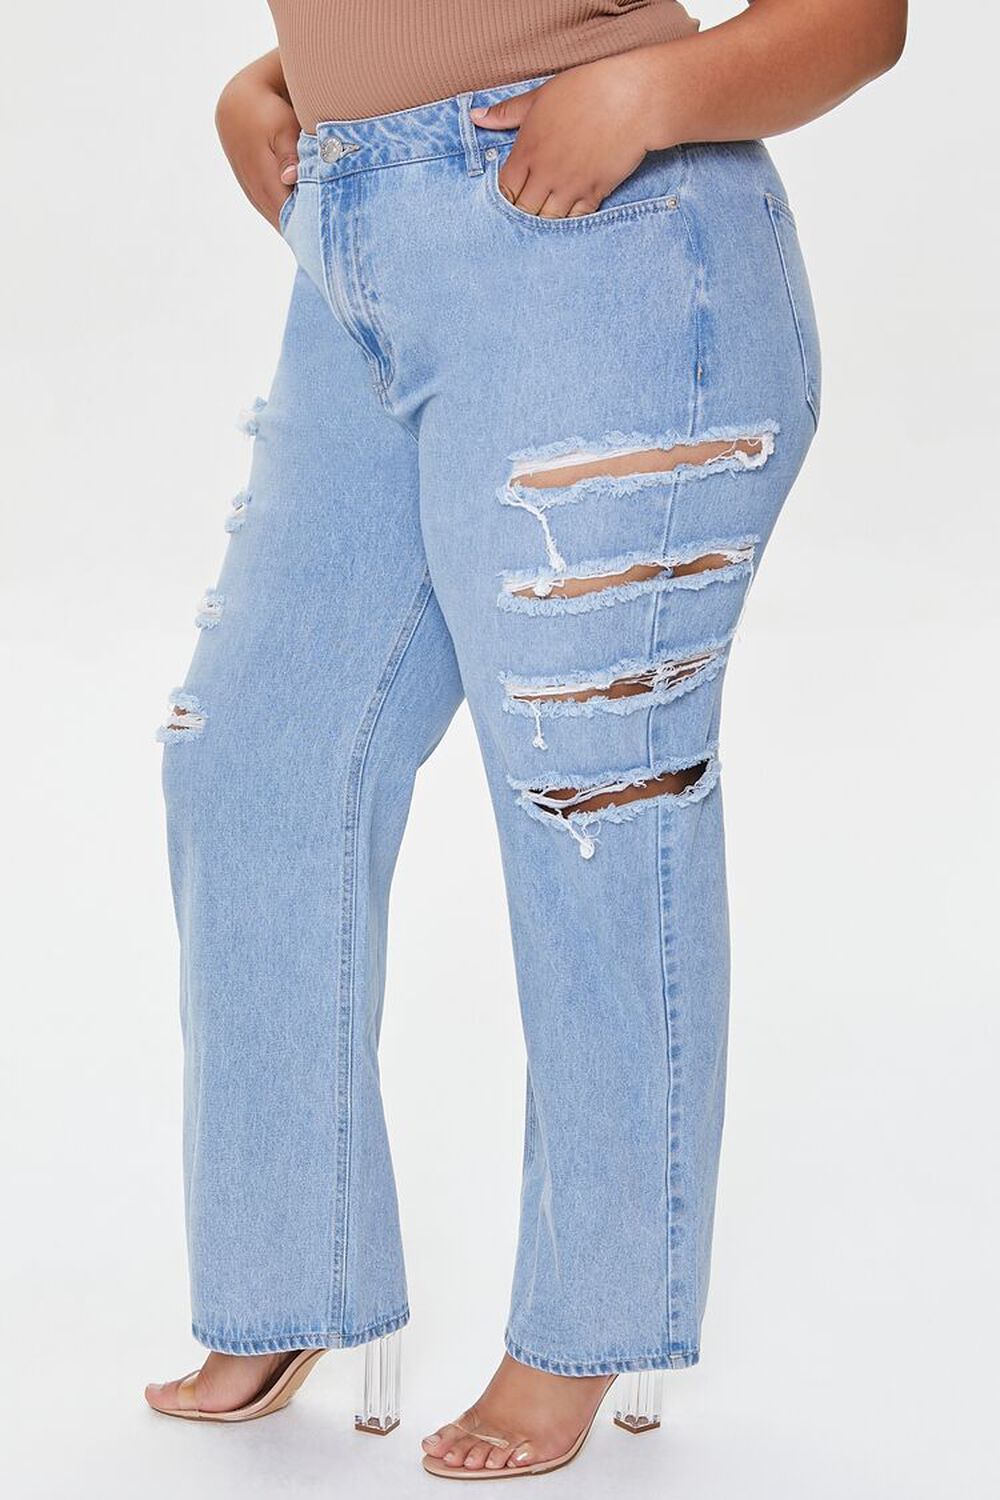 LIGHT DENIM Plus Size 90s-Fit Distressed Jeans, image 3